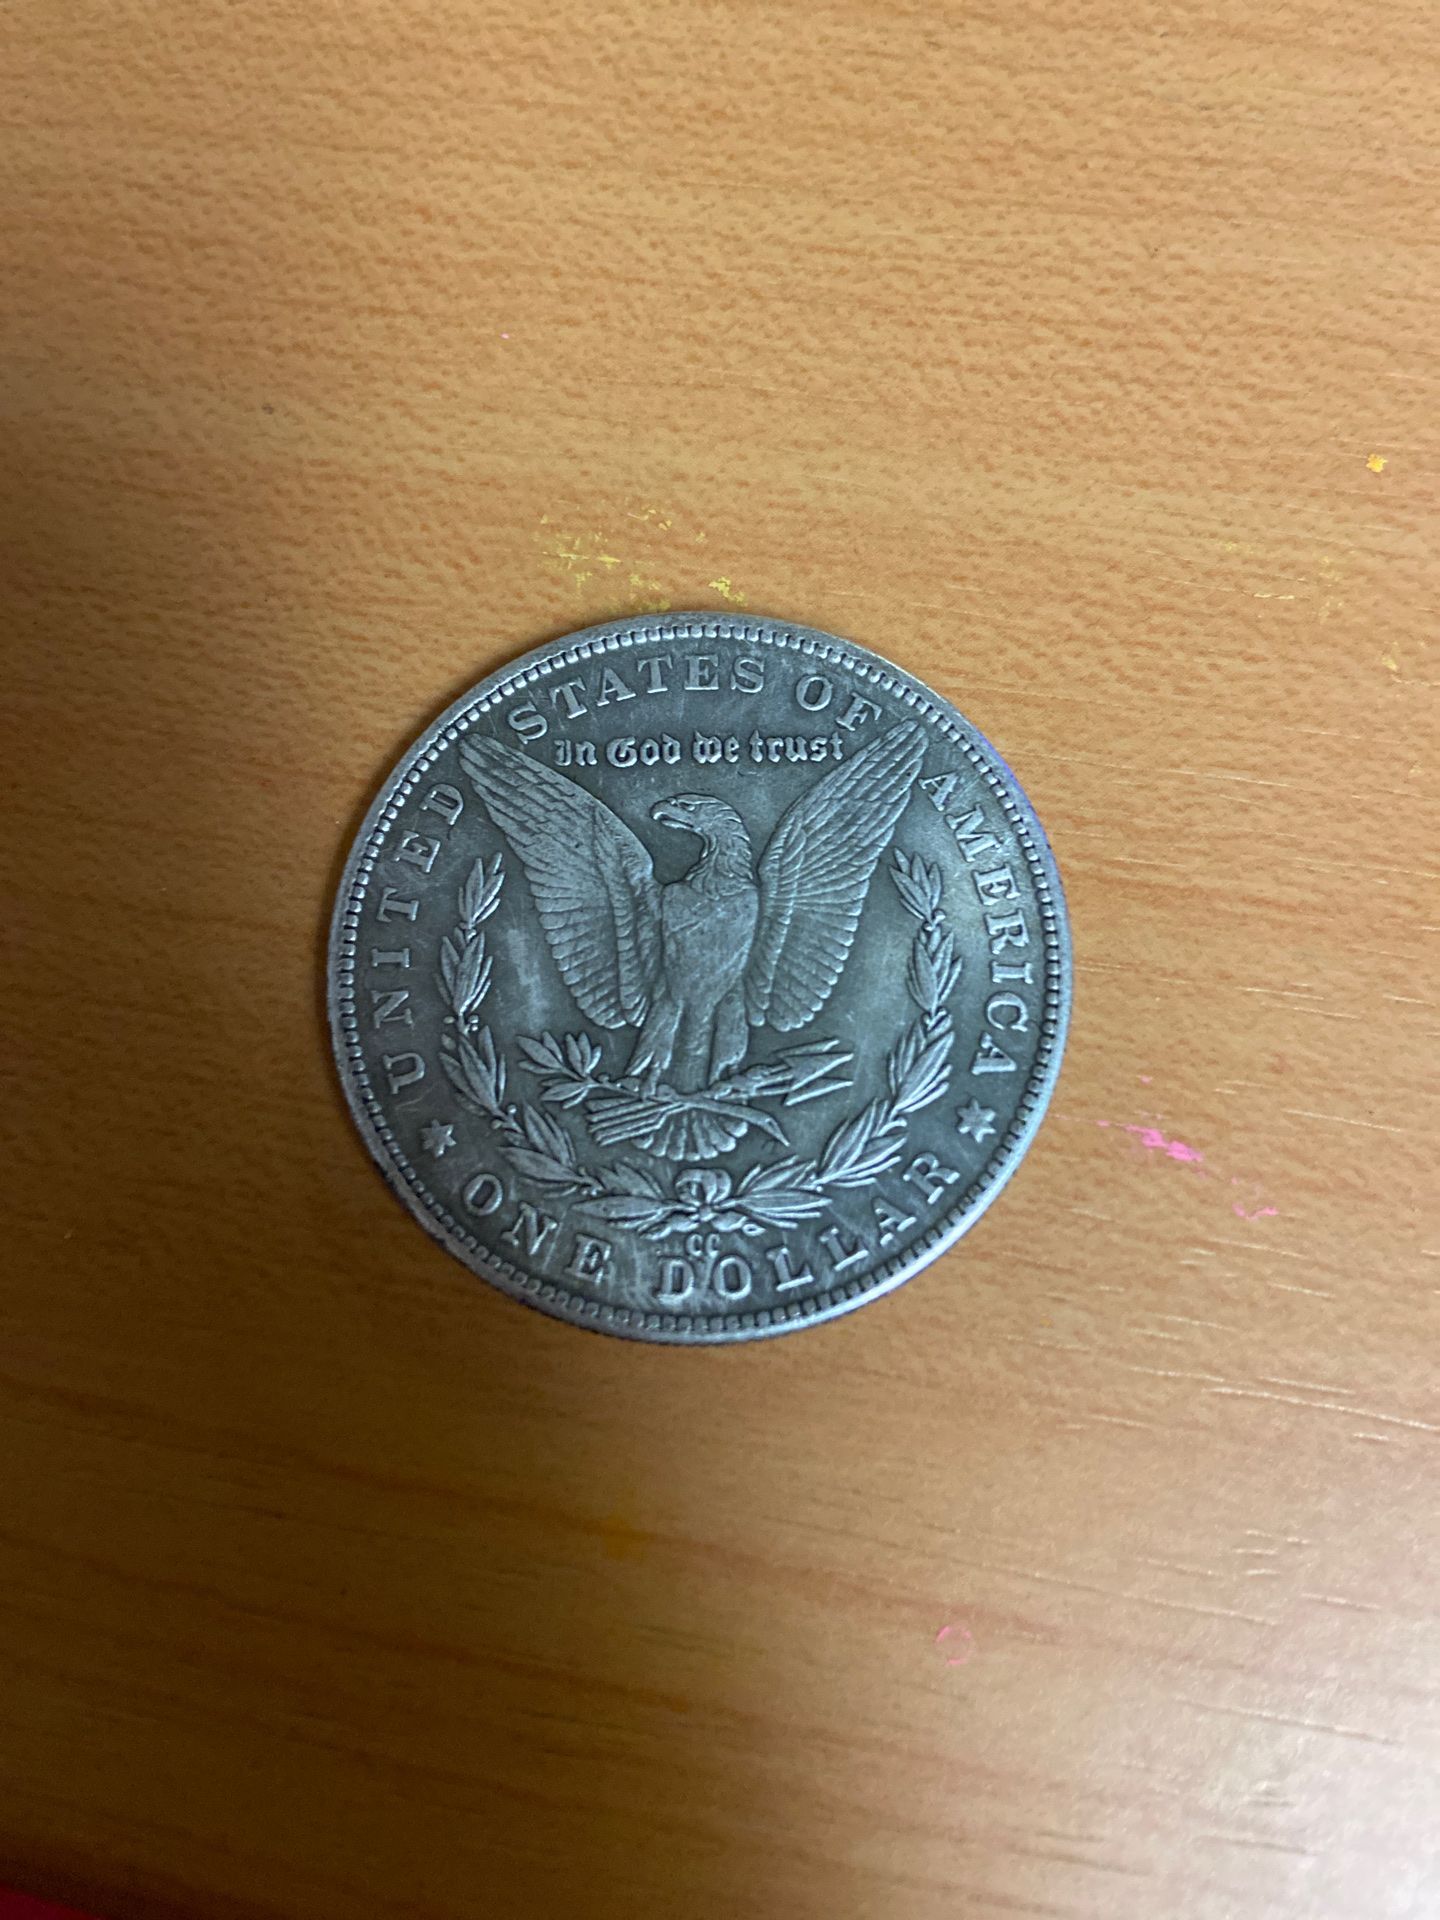 Unique old coin